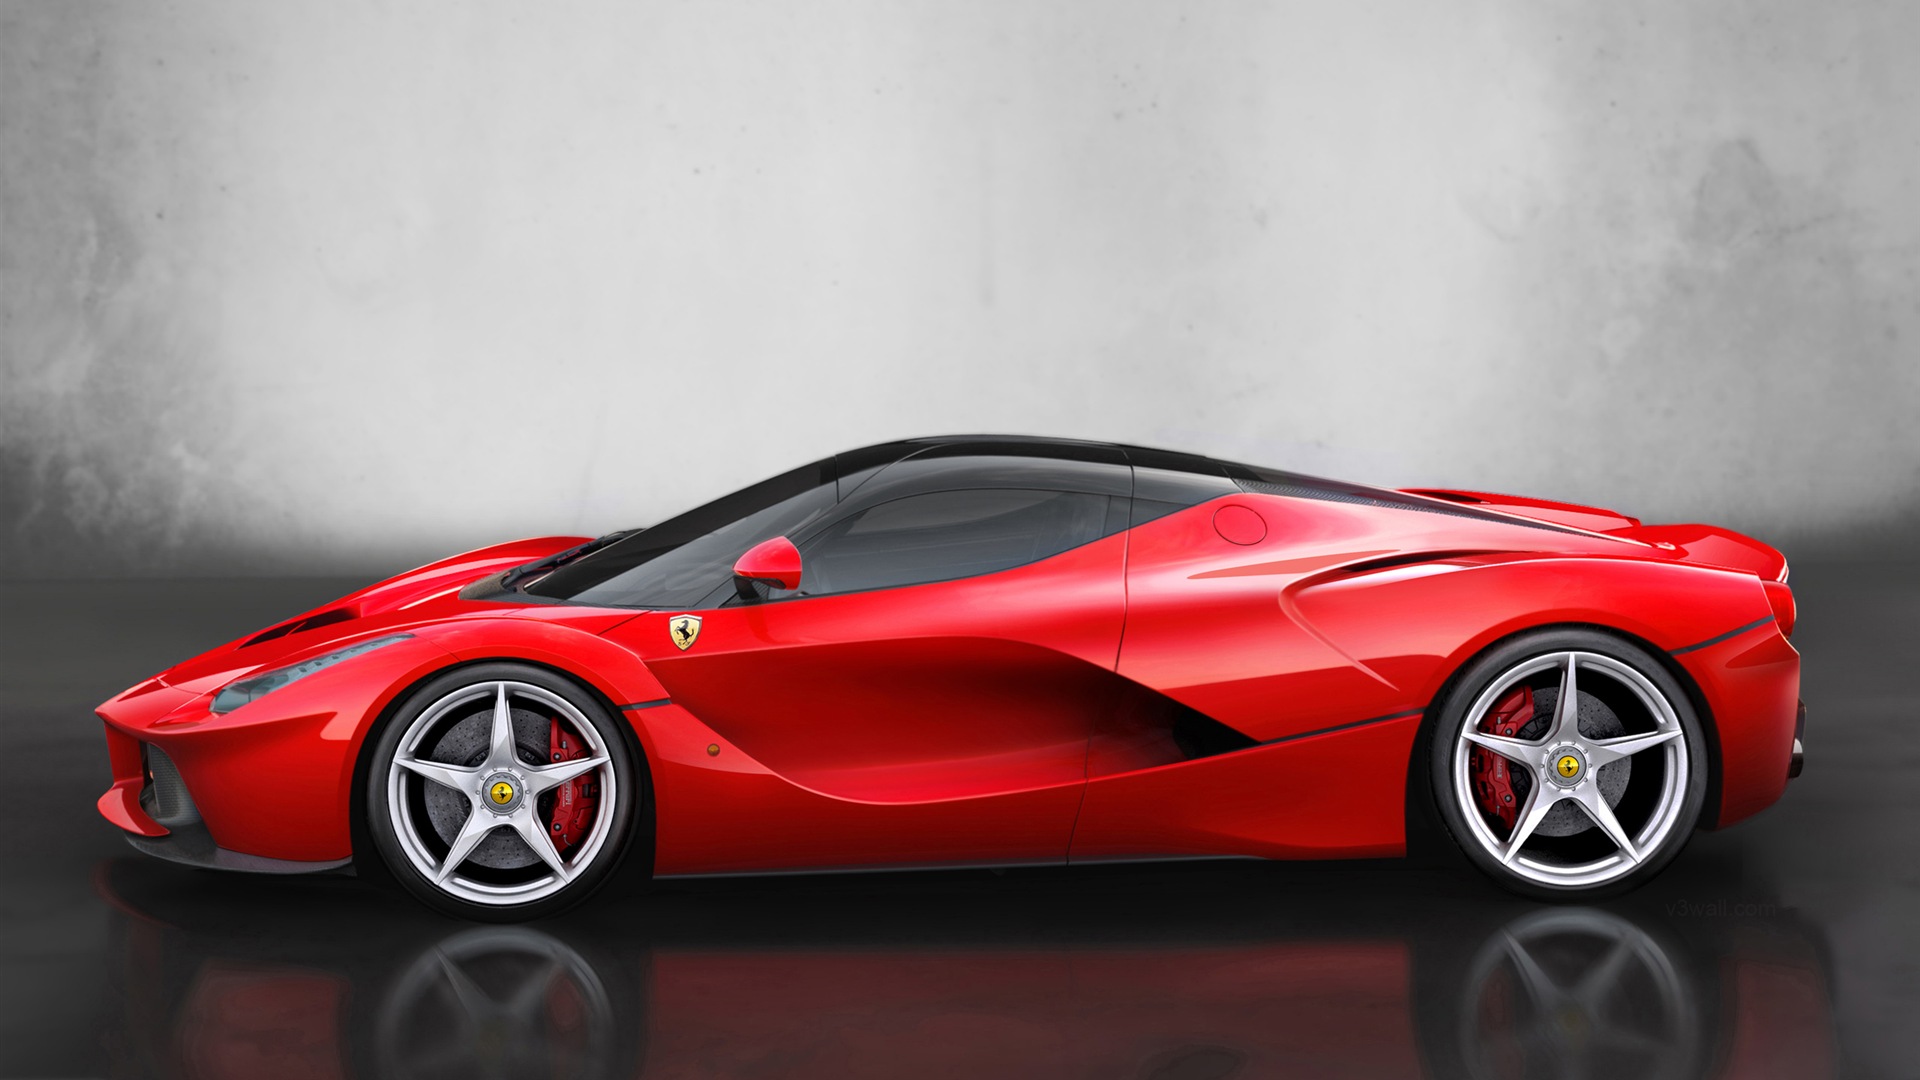 2013 Ferrari LaFerrari 法拉利LaFerrari红色超级跑车高清壁纸4 - 1920x1080